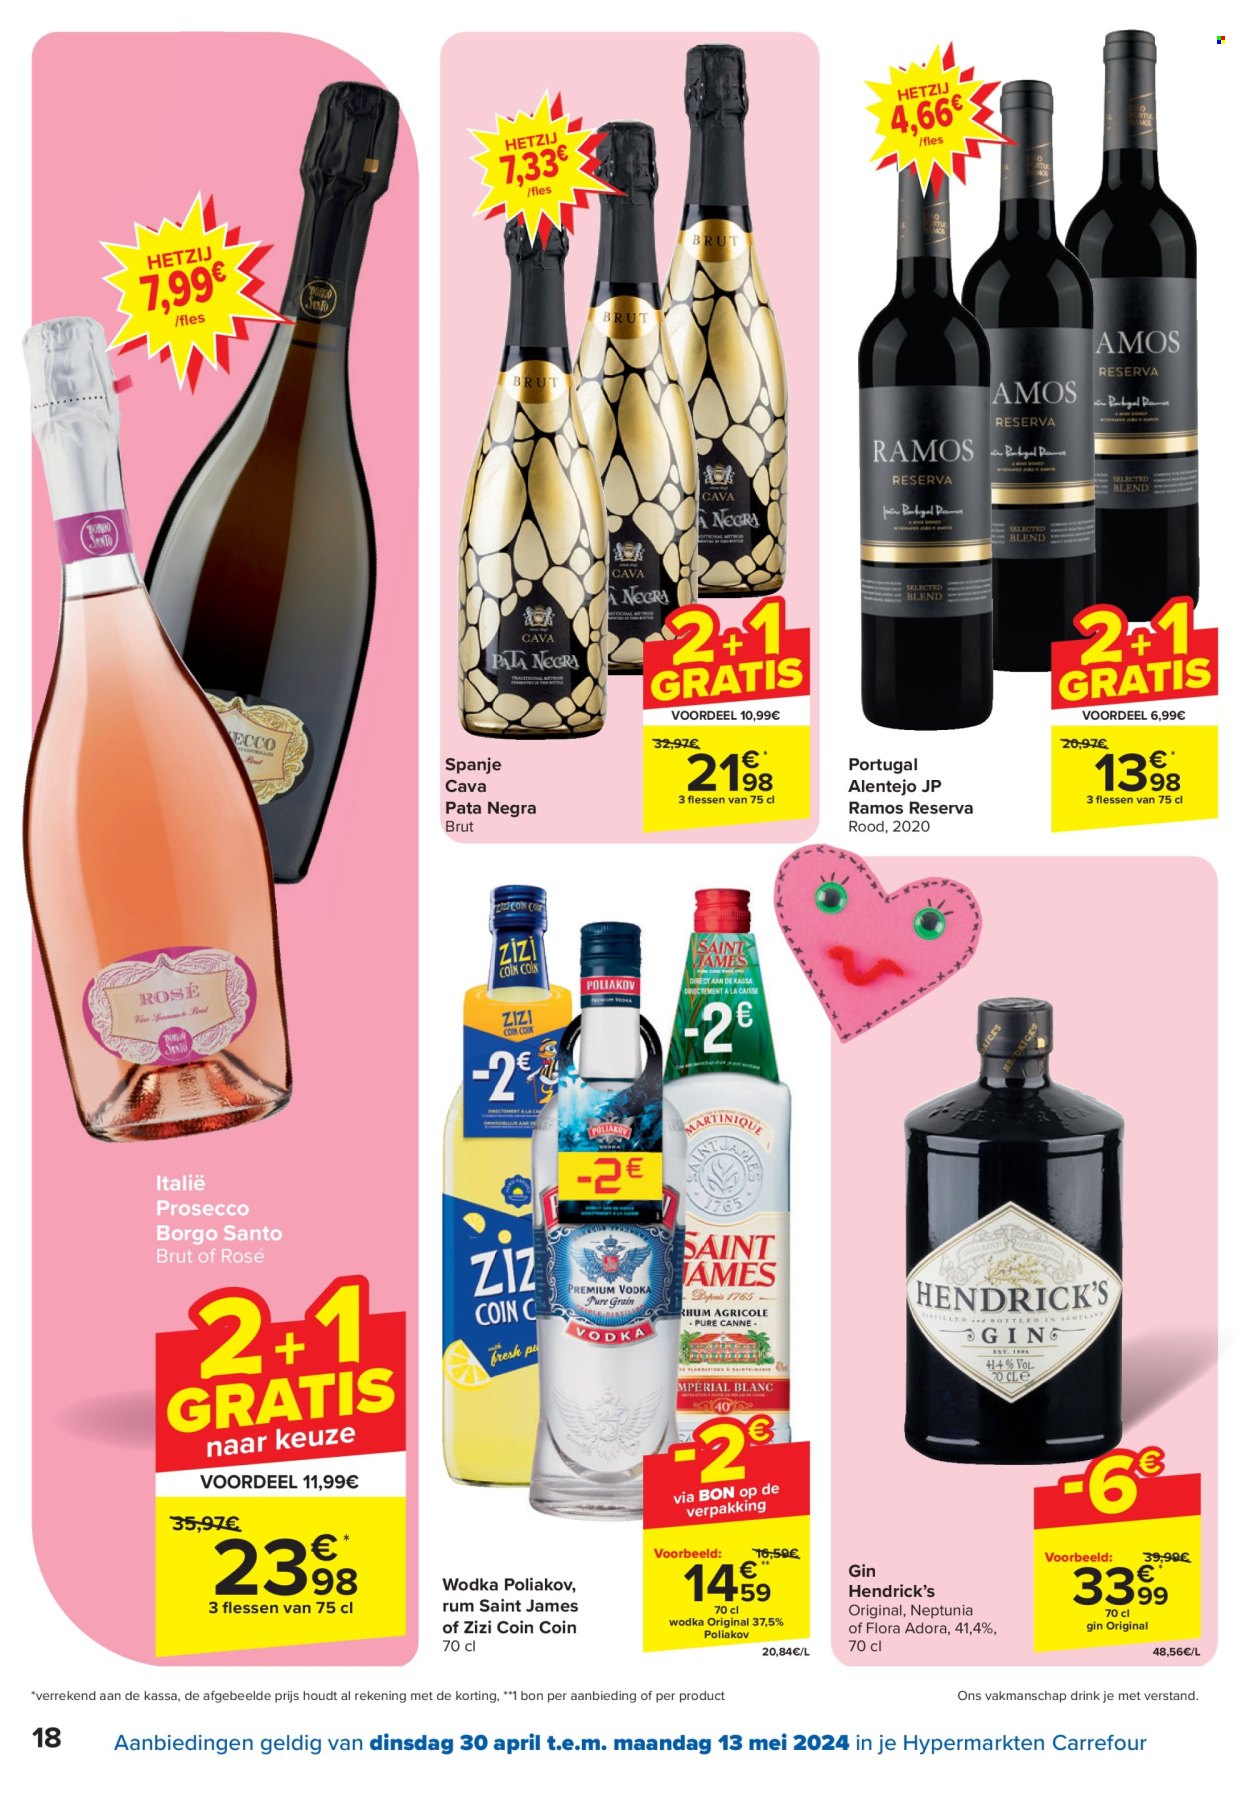 thumbnail - Catalogue Carrefour hypermarkt - 30/04/2024 - 13/05/2024 - Produits soldés - alcool, vin pétillant, gin, vodka, Poliakov, Prosecco. Page 18.